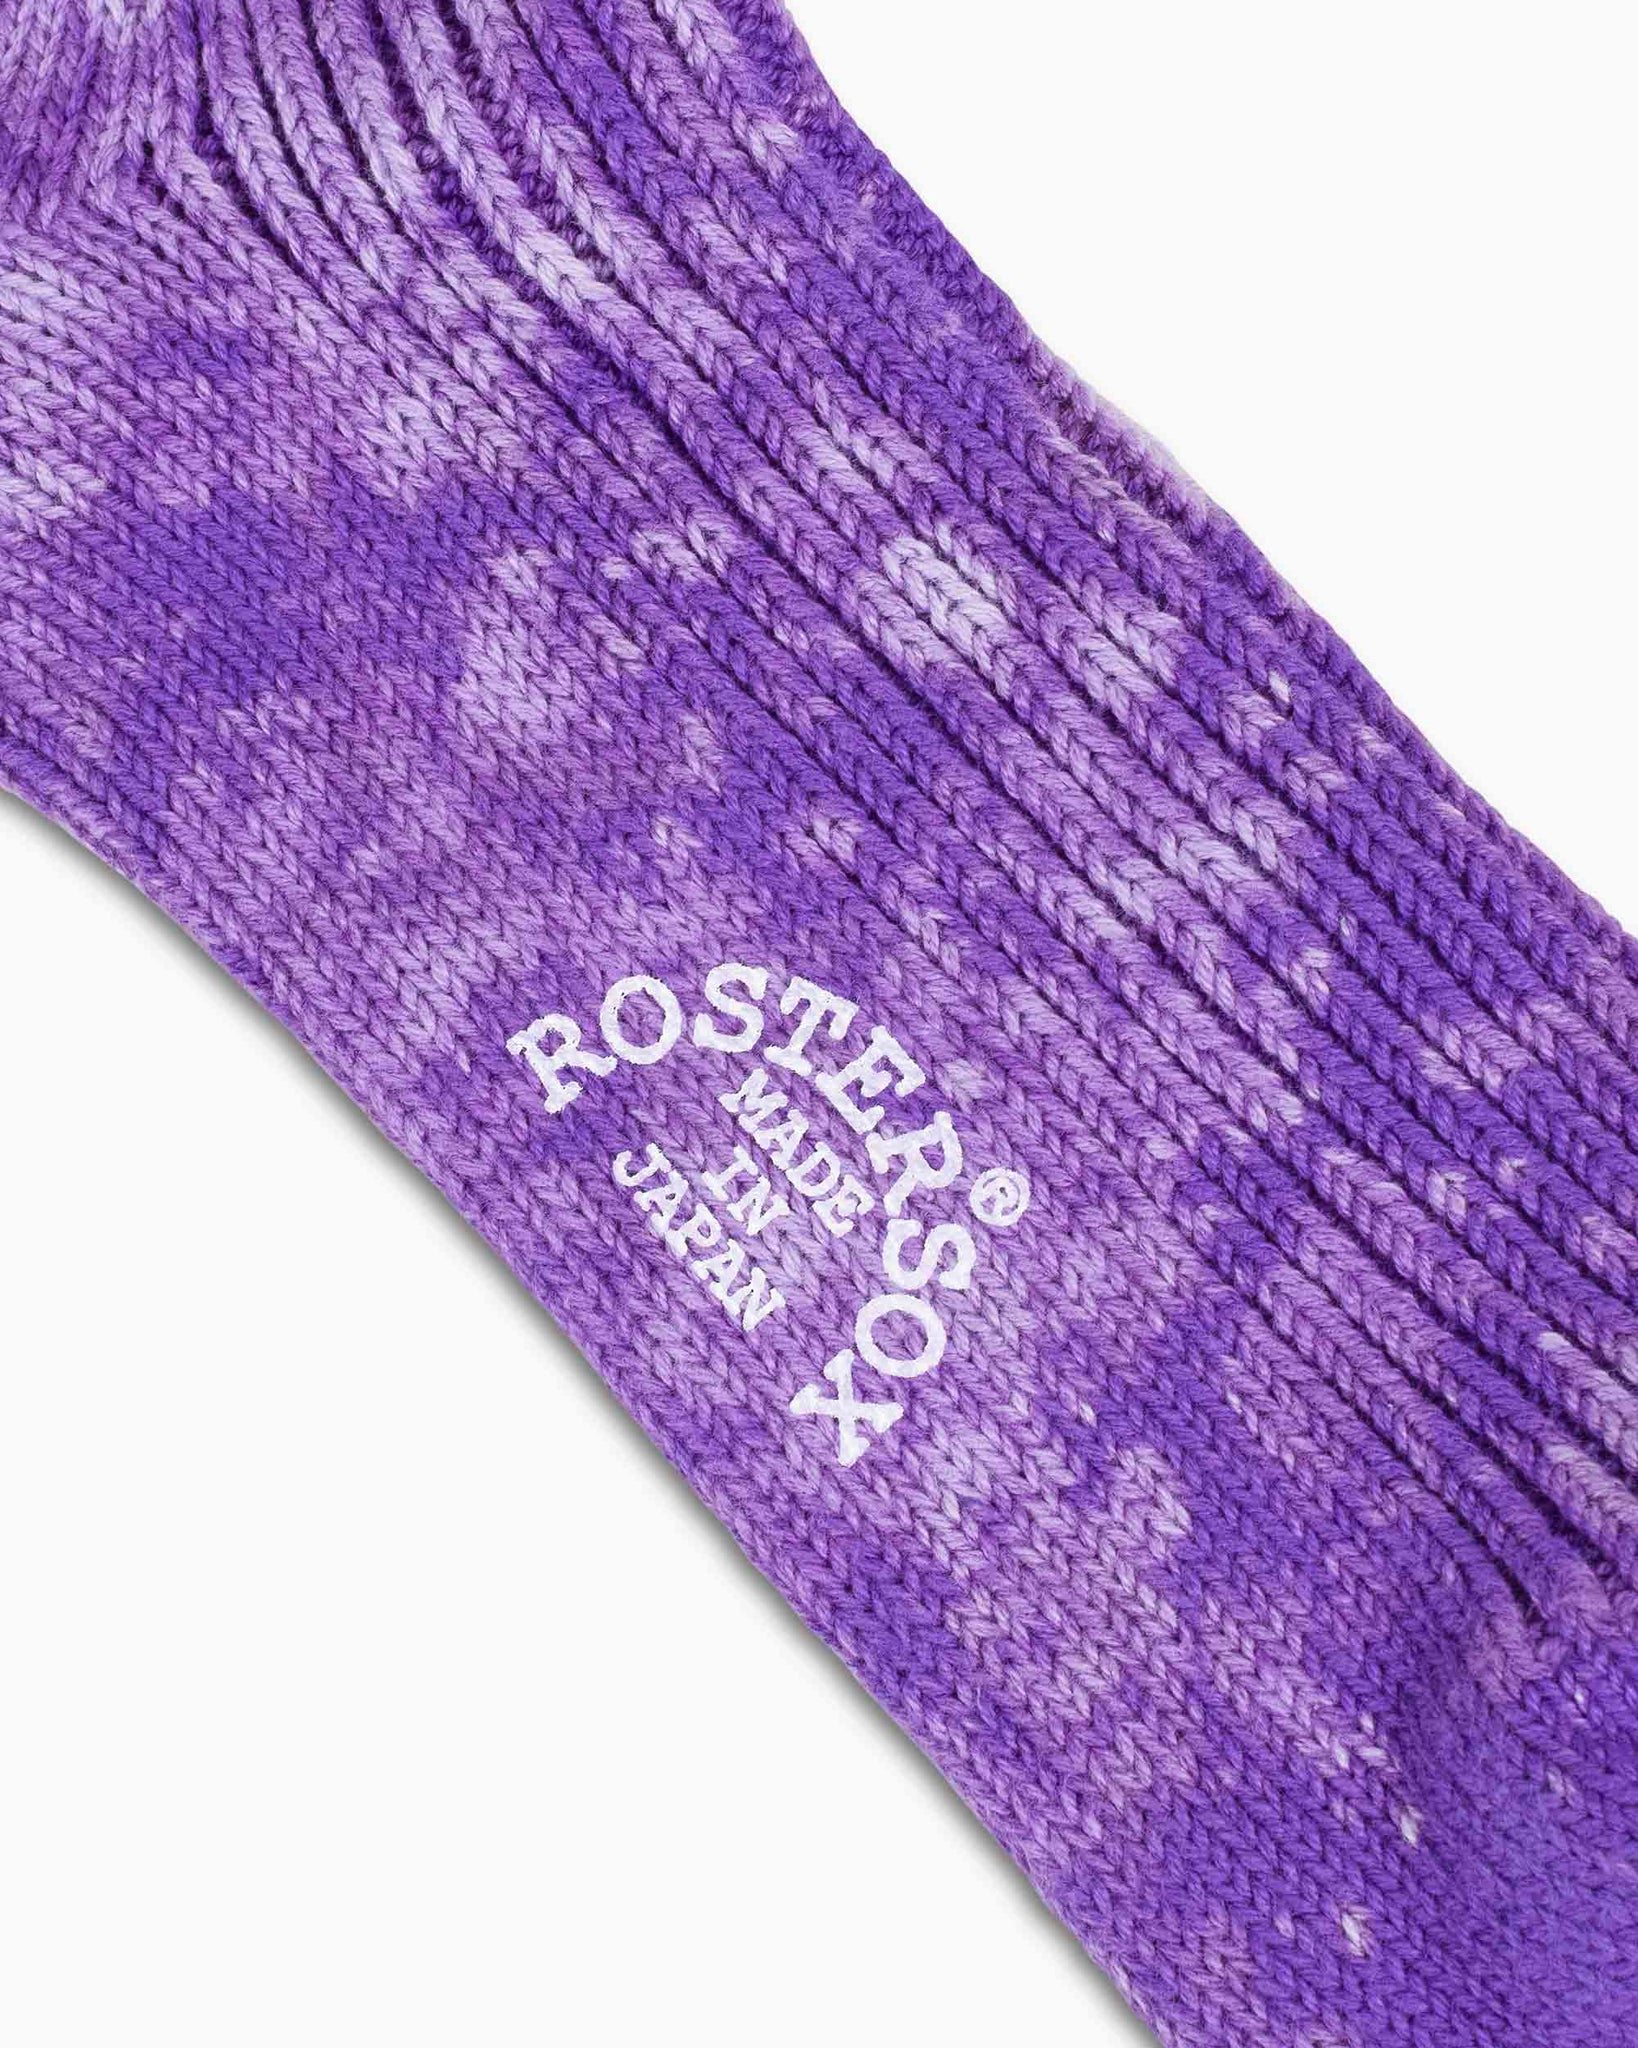 Rostersox BA Socks Purple Detail